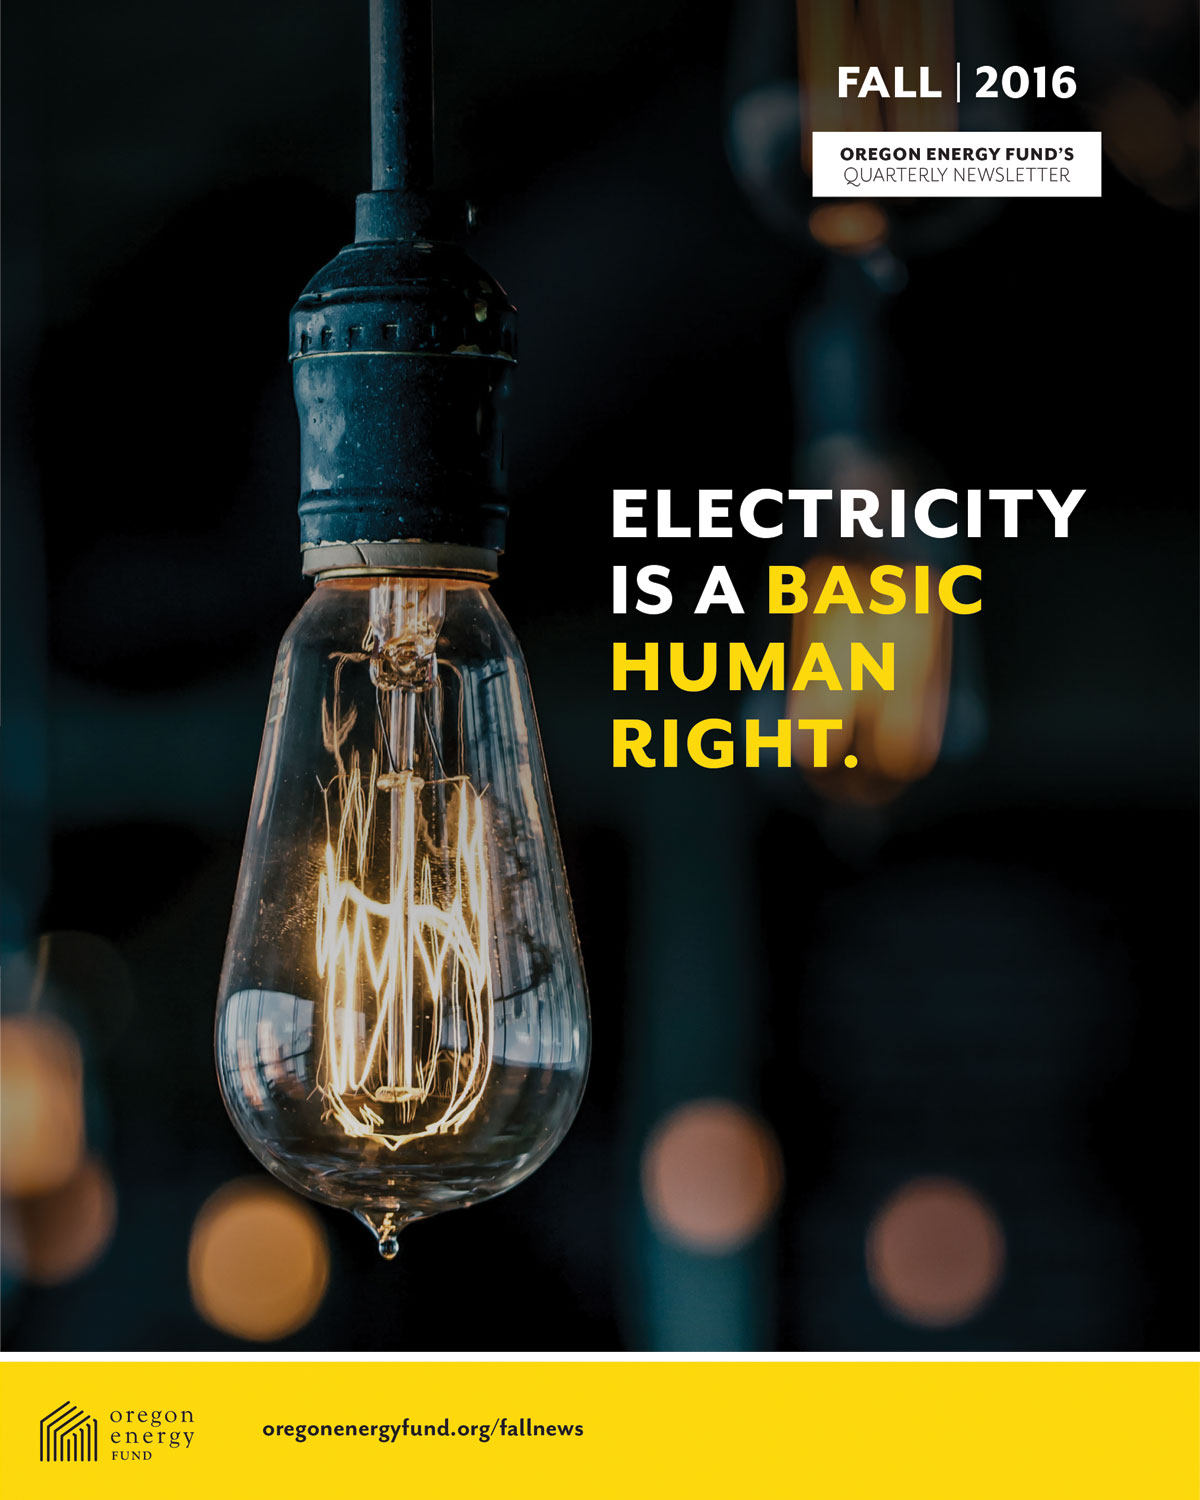 Oregon Energy Fund ad design